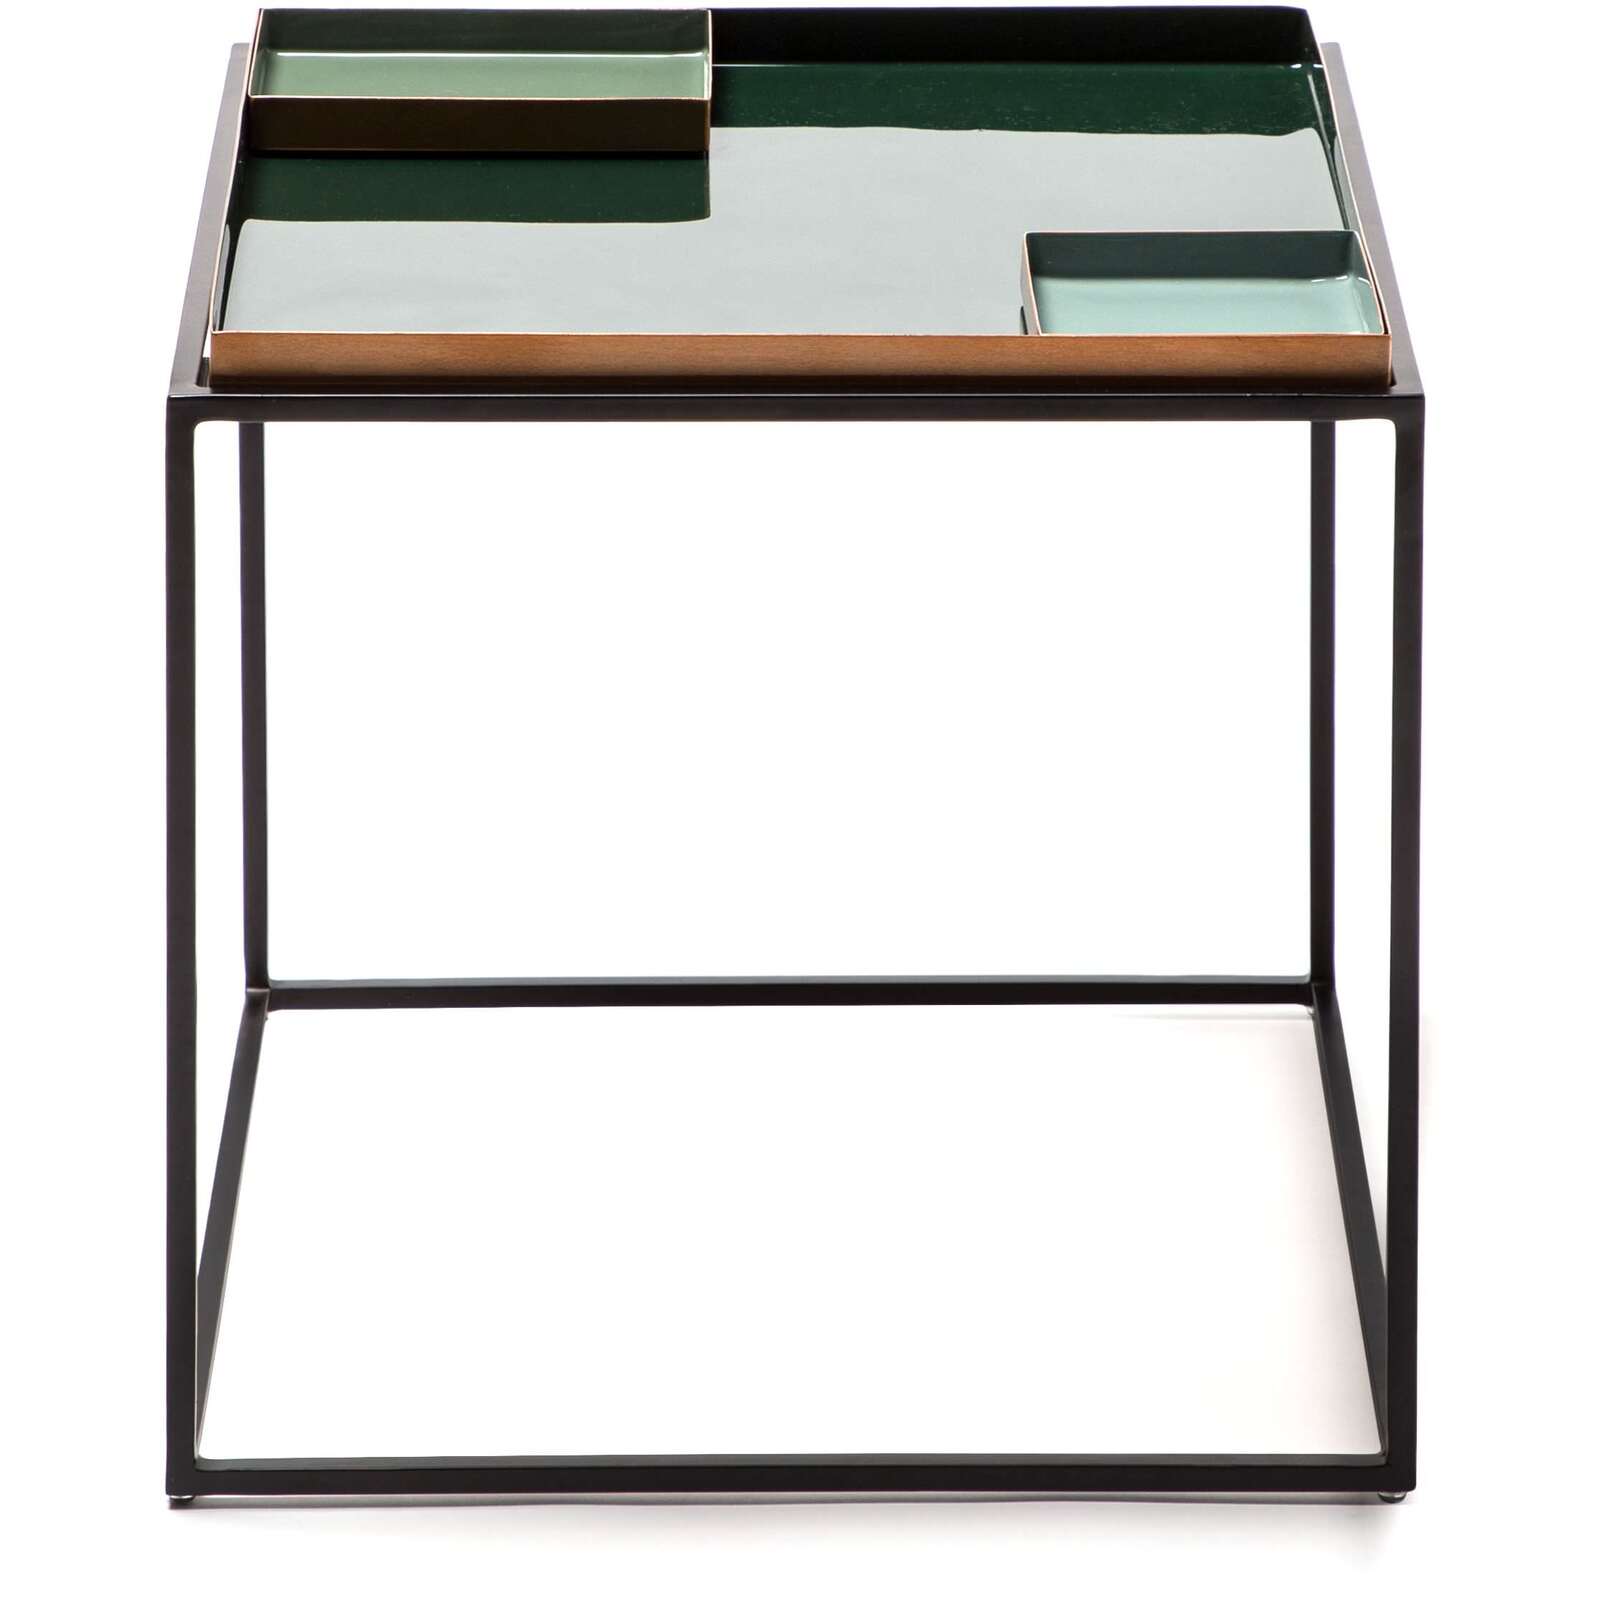 Table dâappoint carrÃ© couleur vert l40cm